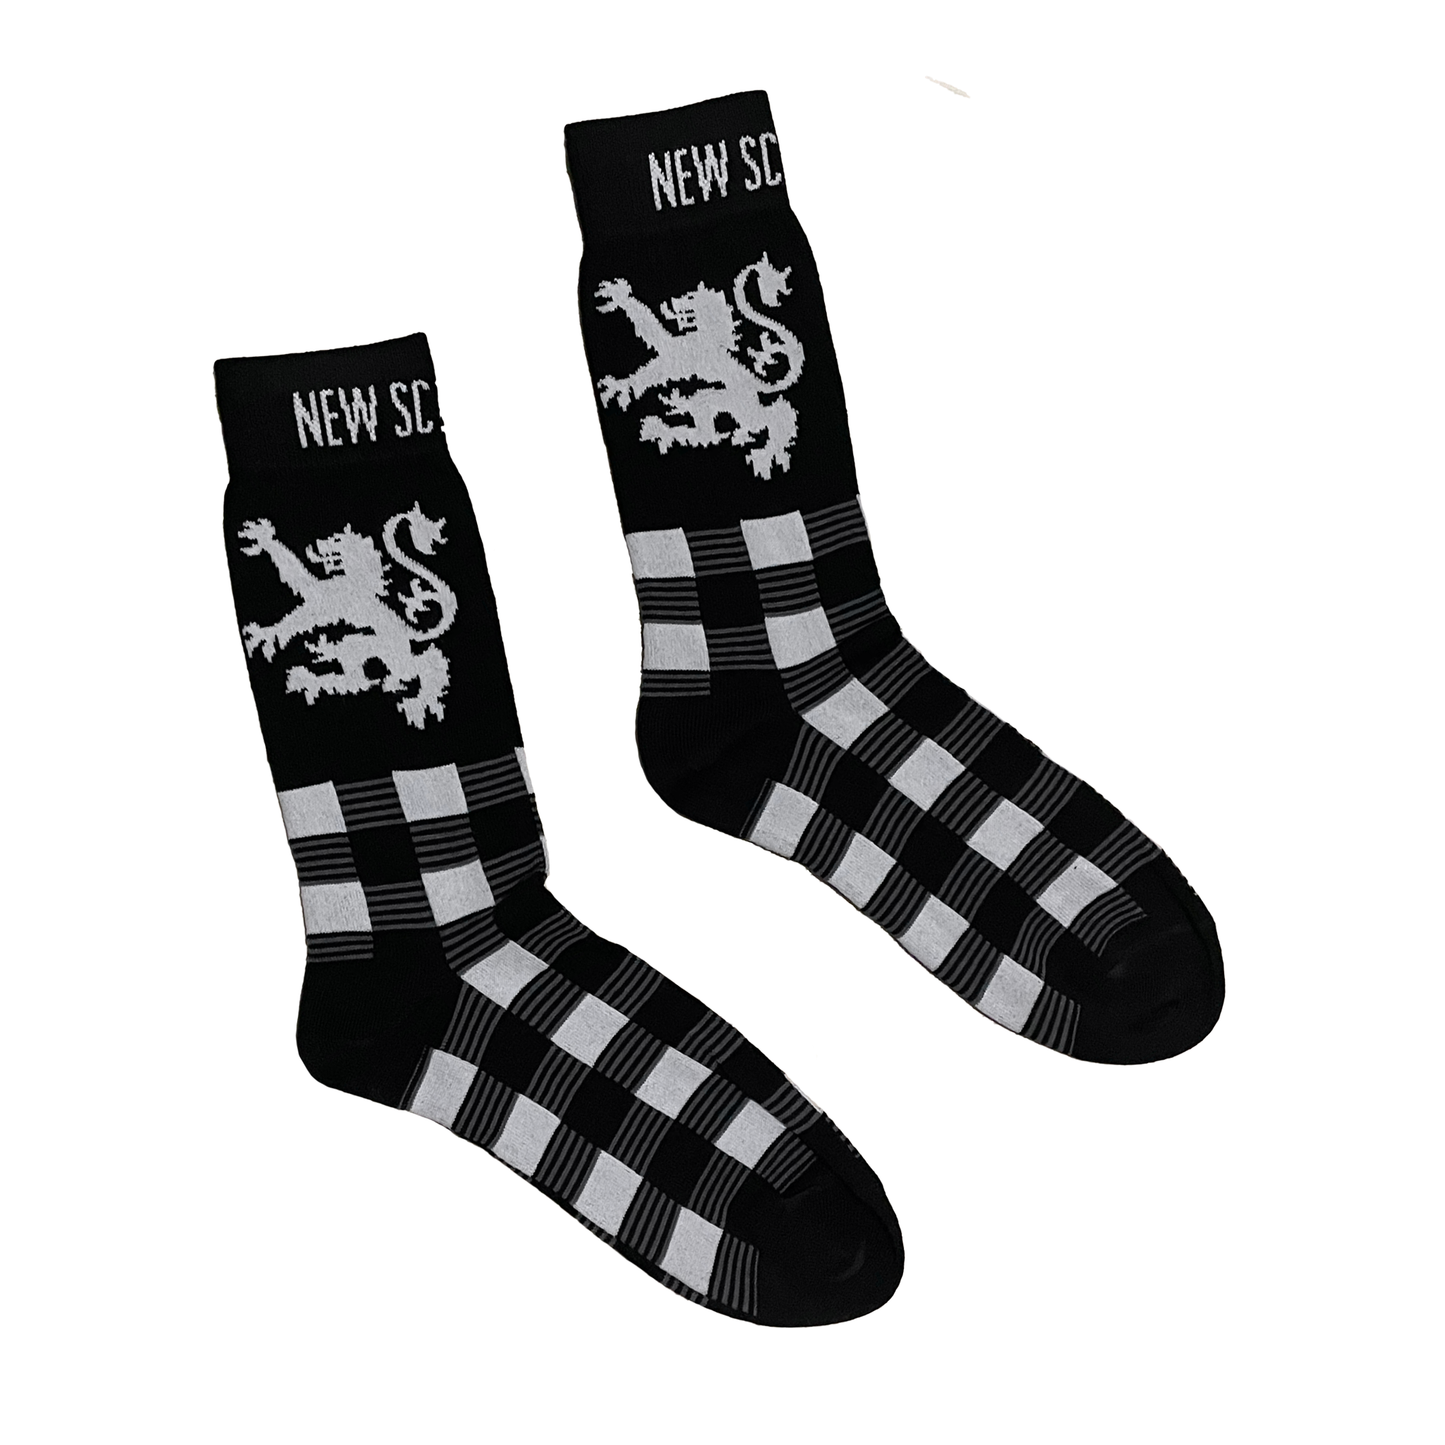 New Scotland Dress Socks